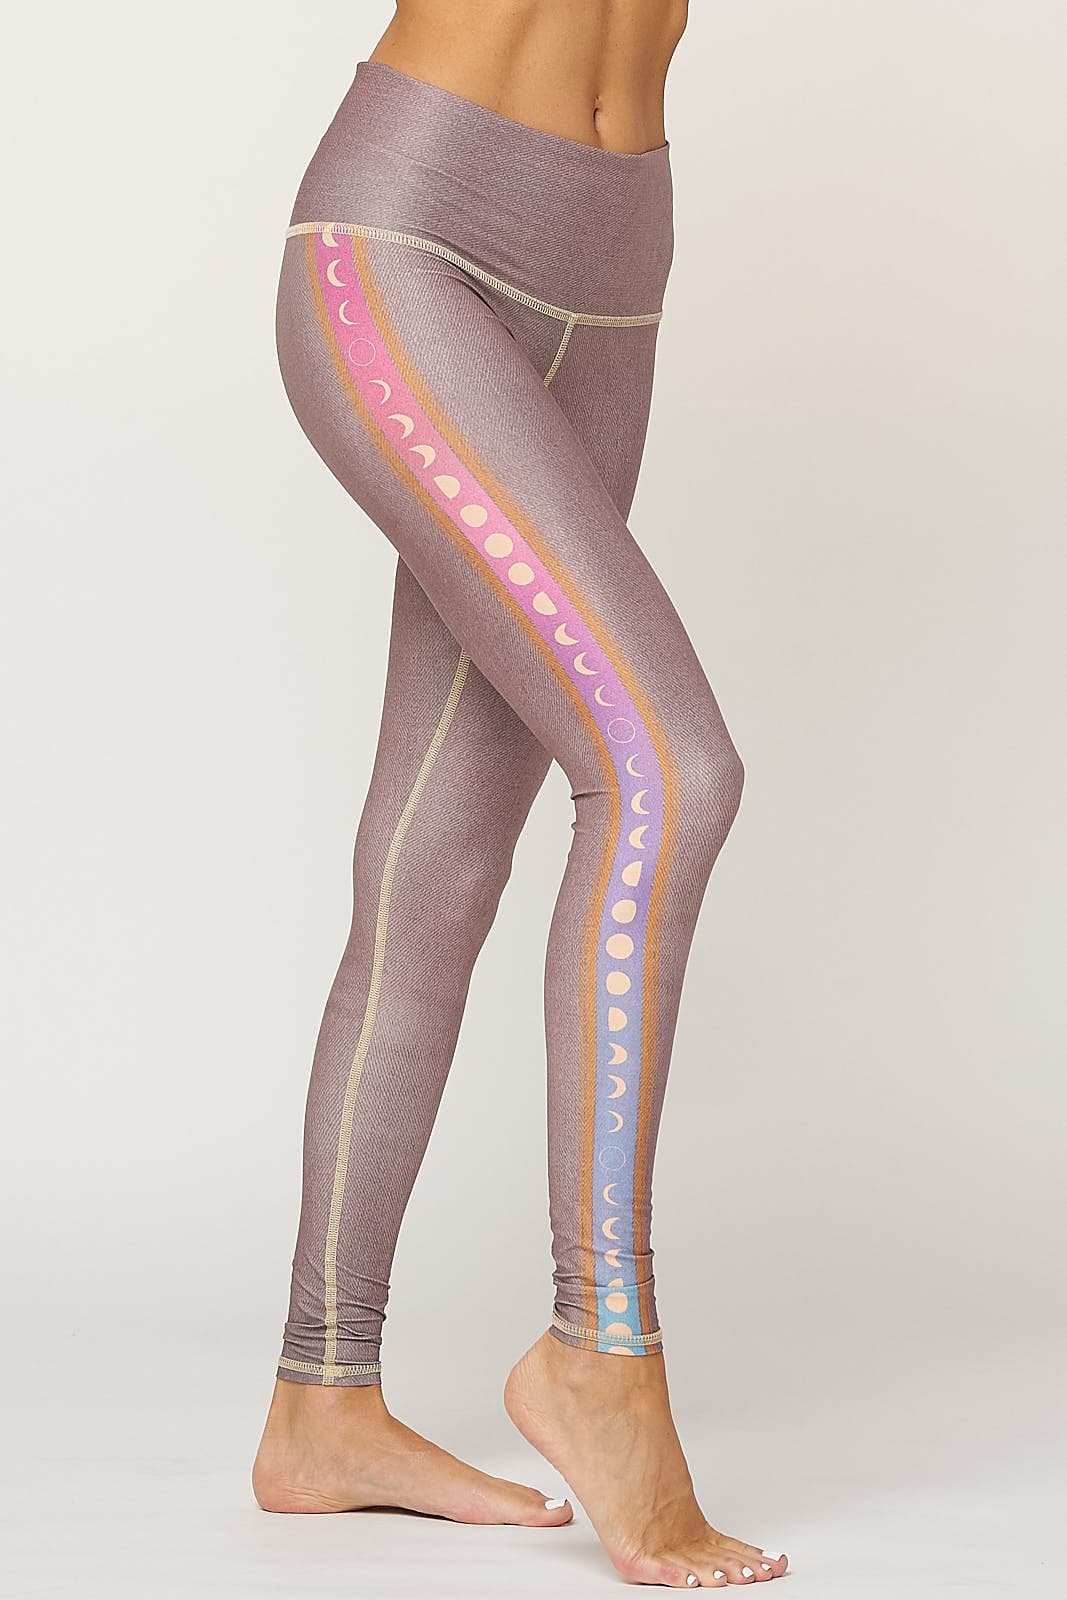 Teeki Multicolor Snake Print Stretchy Hot Yoga Pants Leggings High Waisted  XS